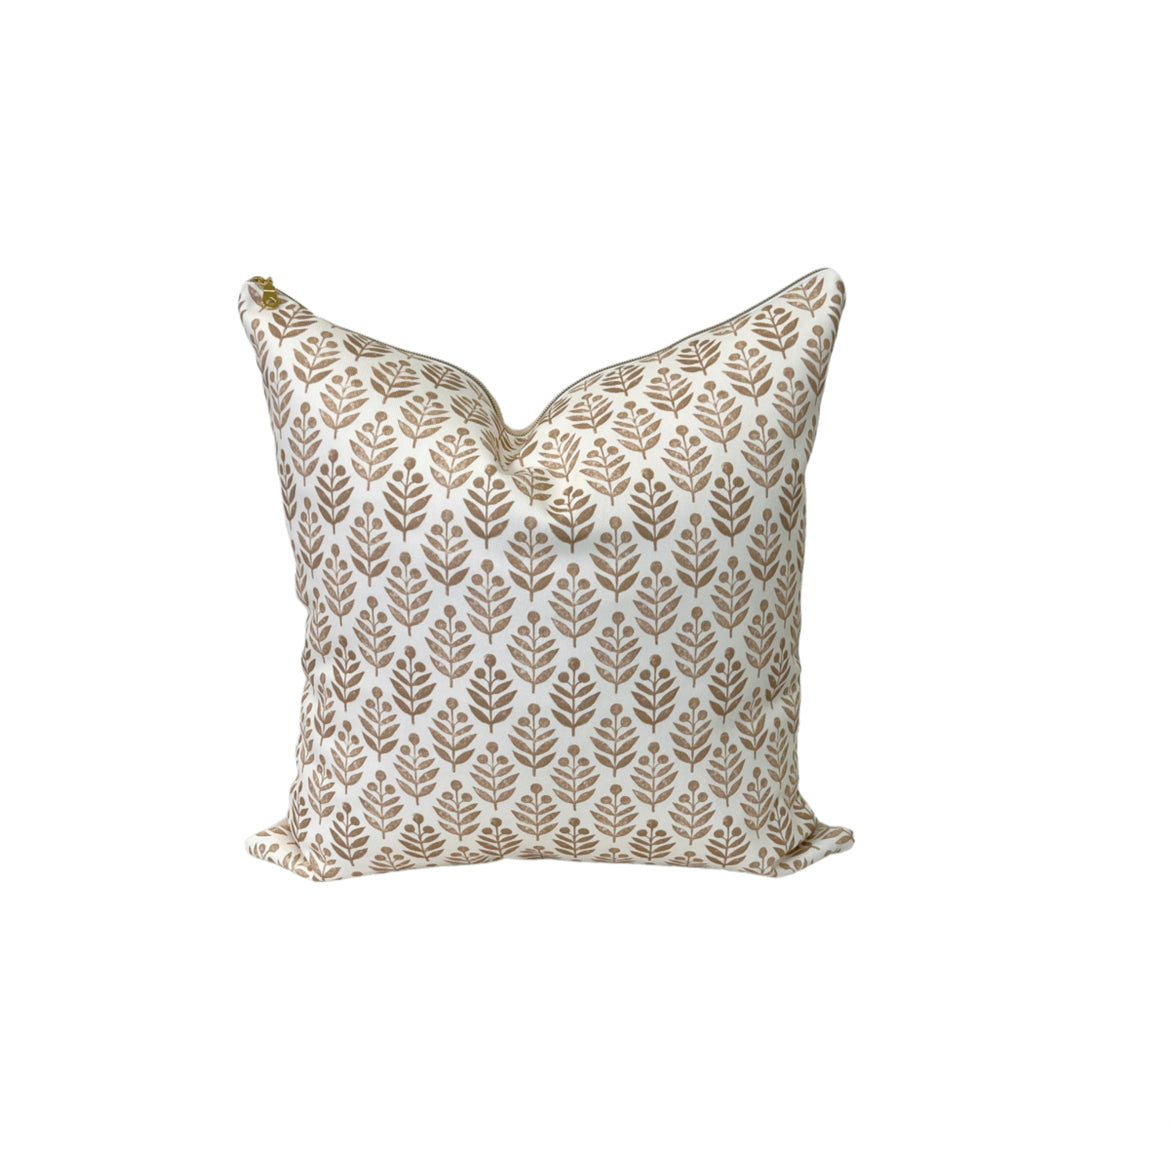 Lotti Soft Bark Pillow Cover - Designed by Danika Herrick